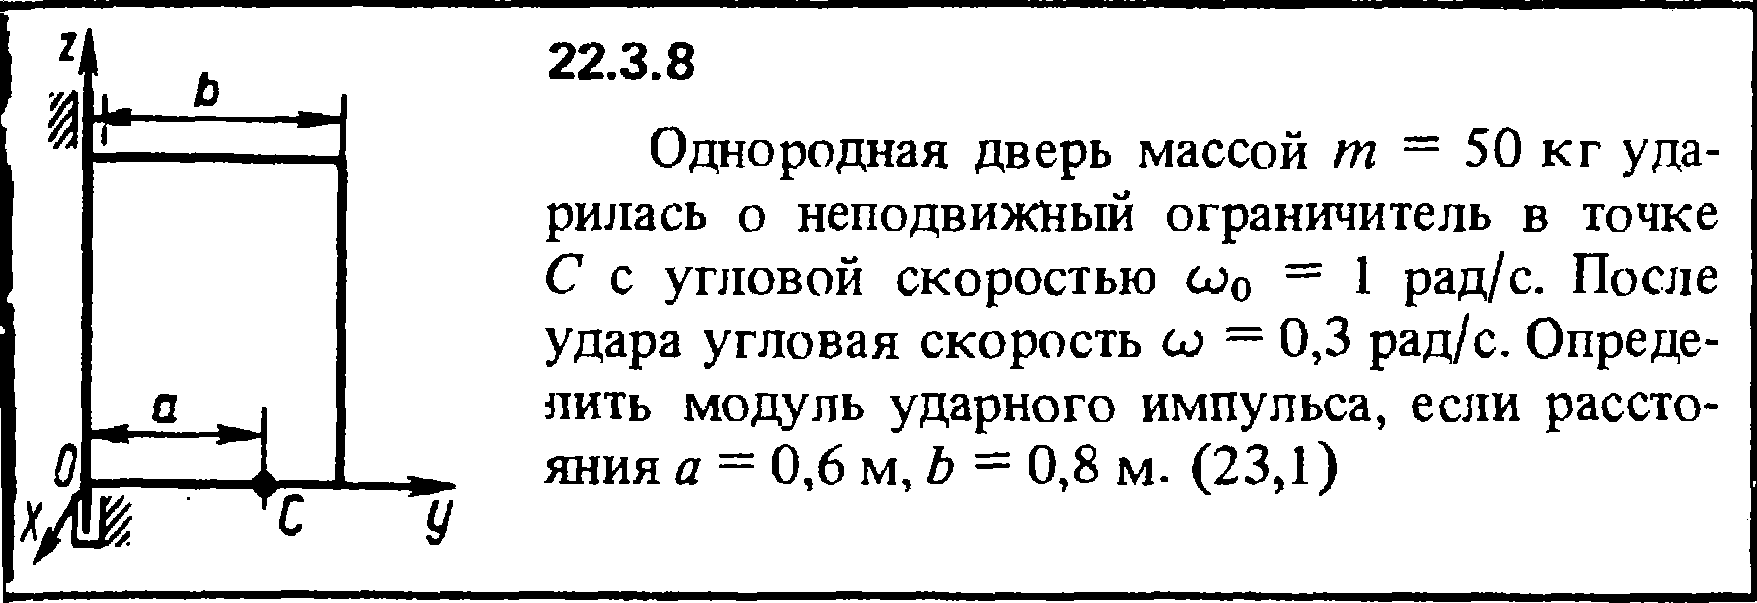 Решение 22.3.8 из сборника (решебника) Кепе О.Е. 1989